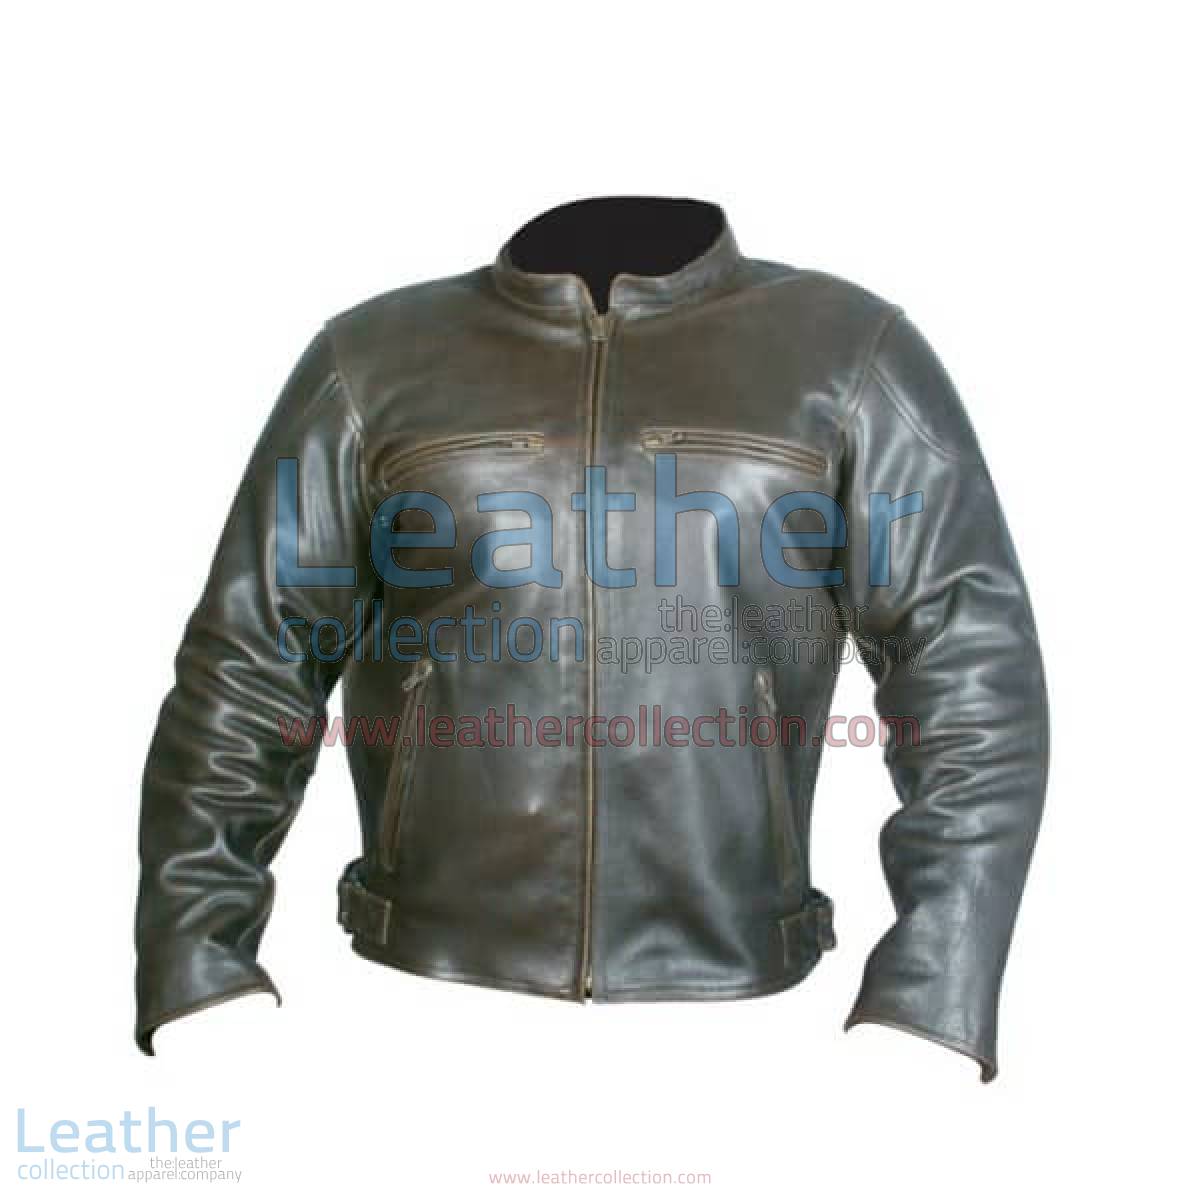 Retro Brown Leather Jacket